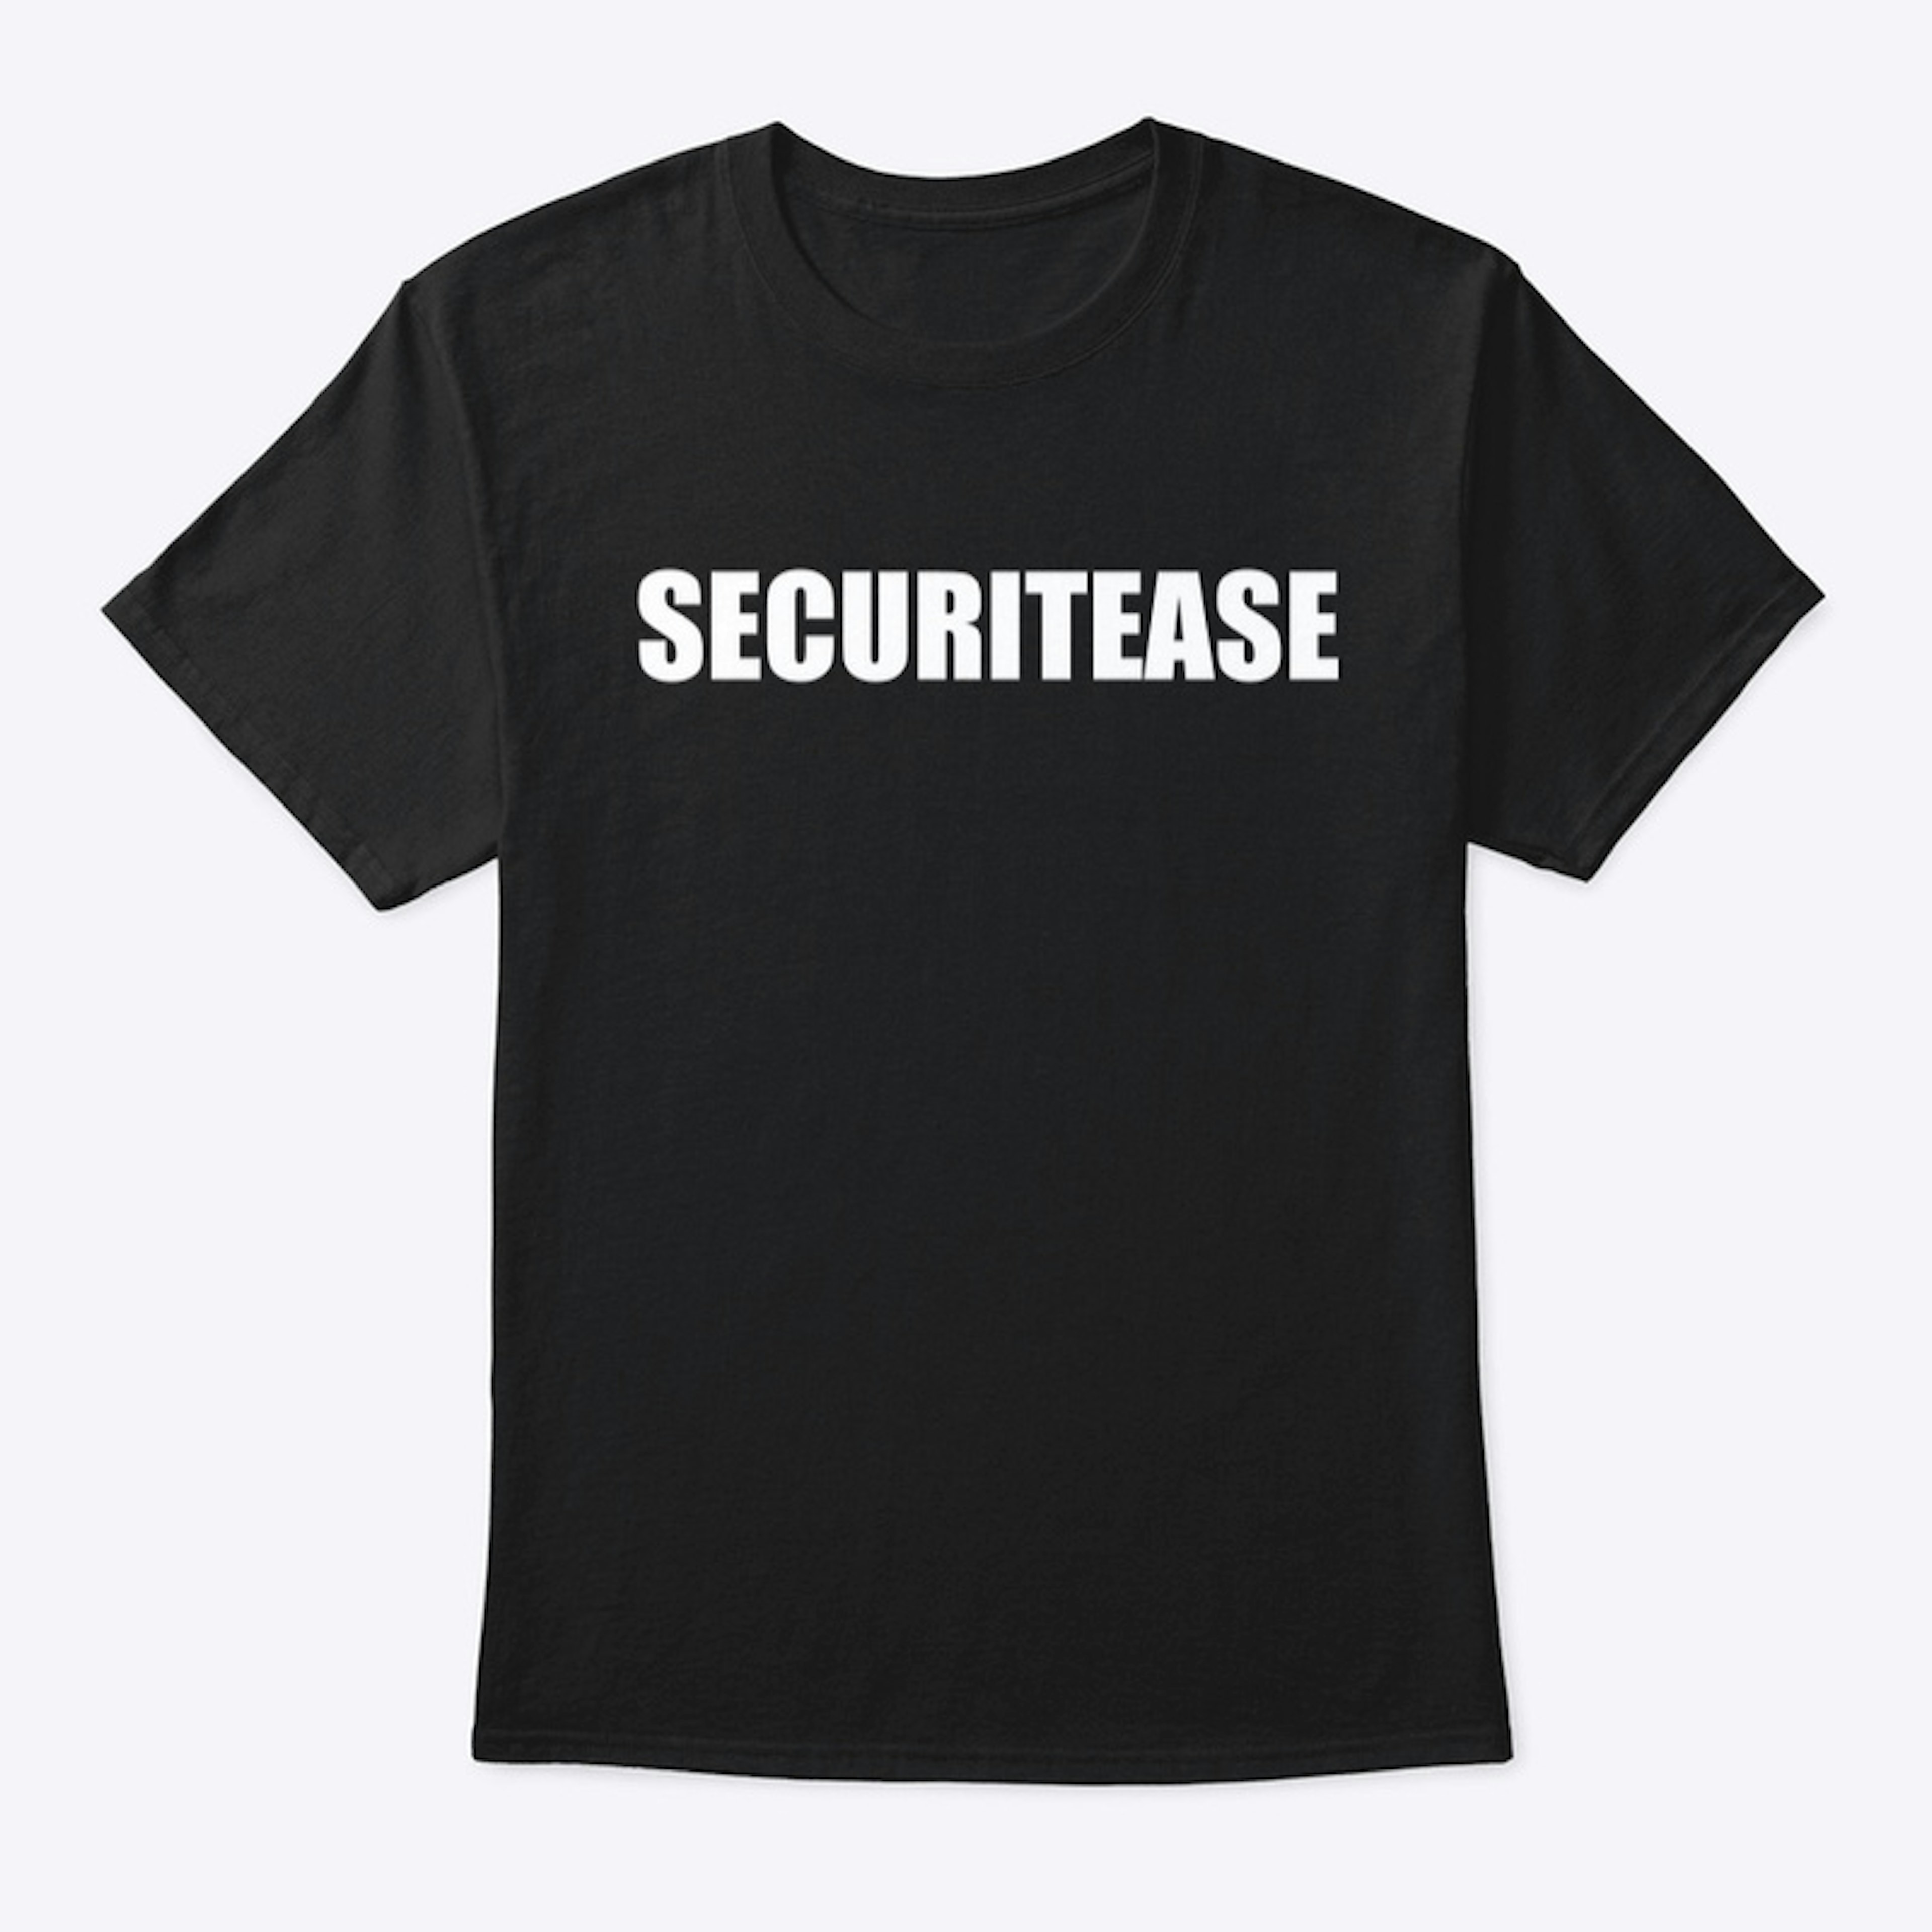 "Securi-tease" T-Shirt